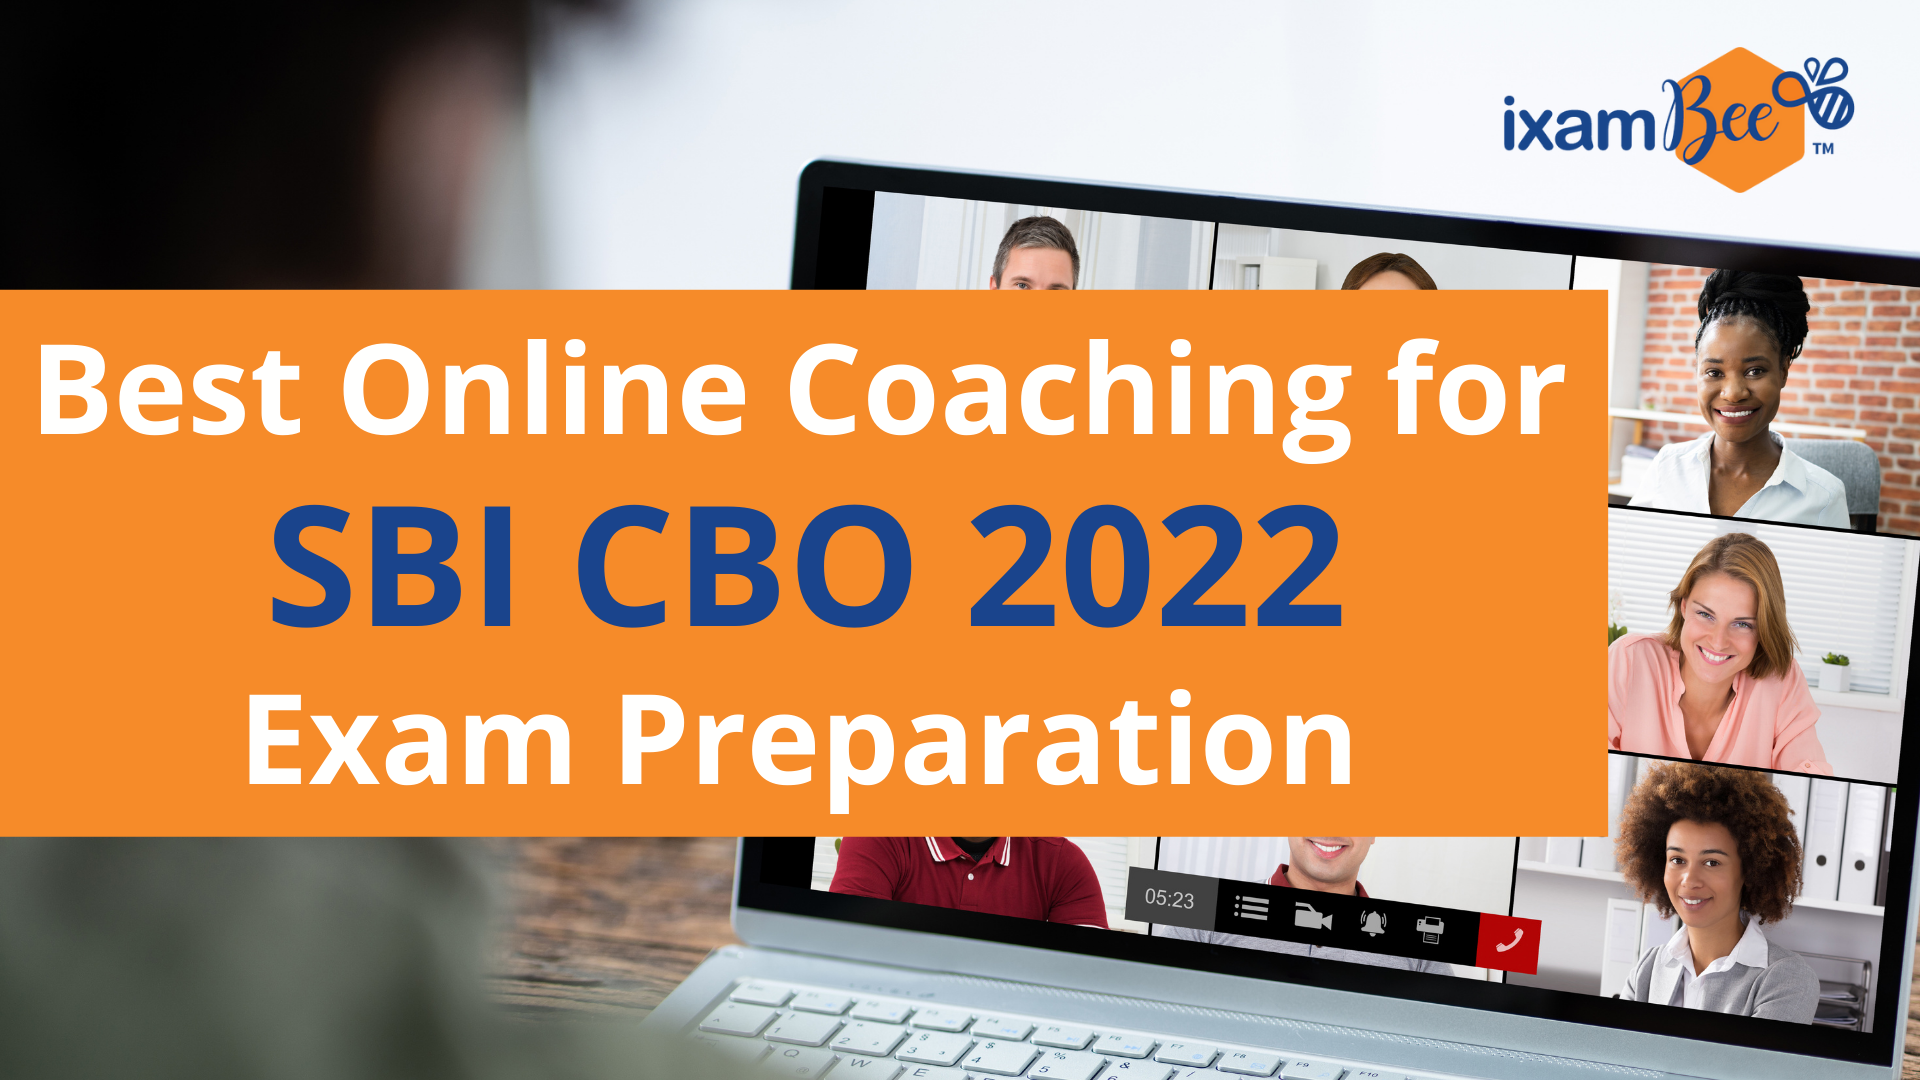 SBI CBO 2022 Exam Preparation